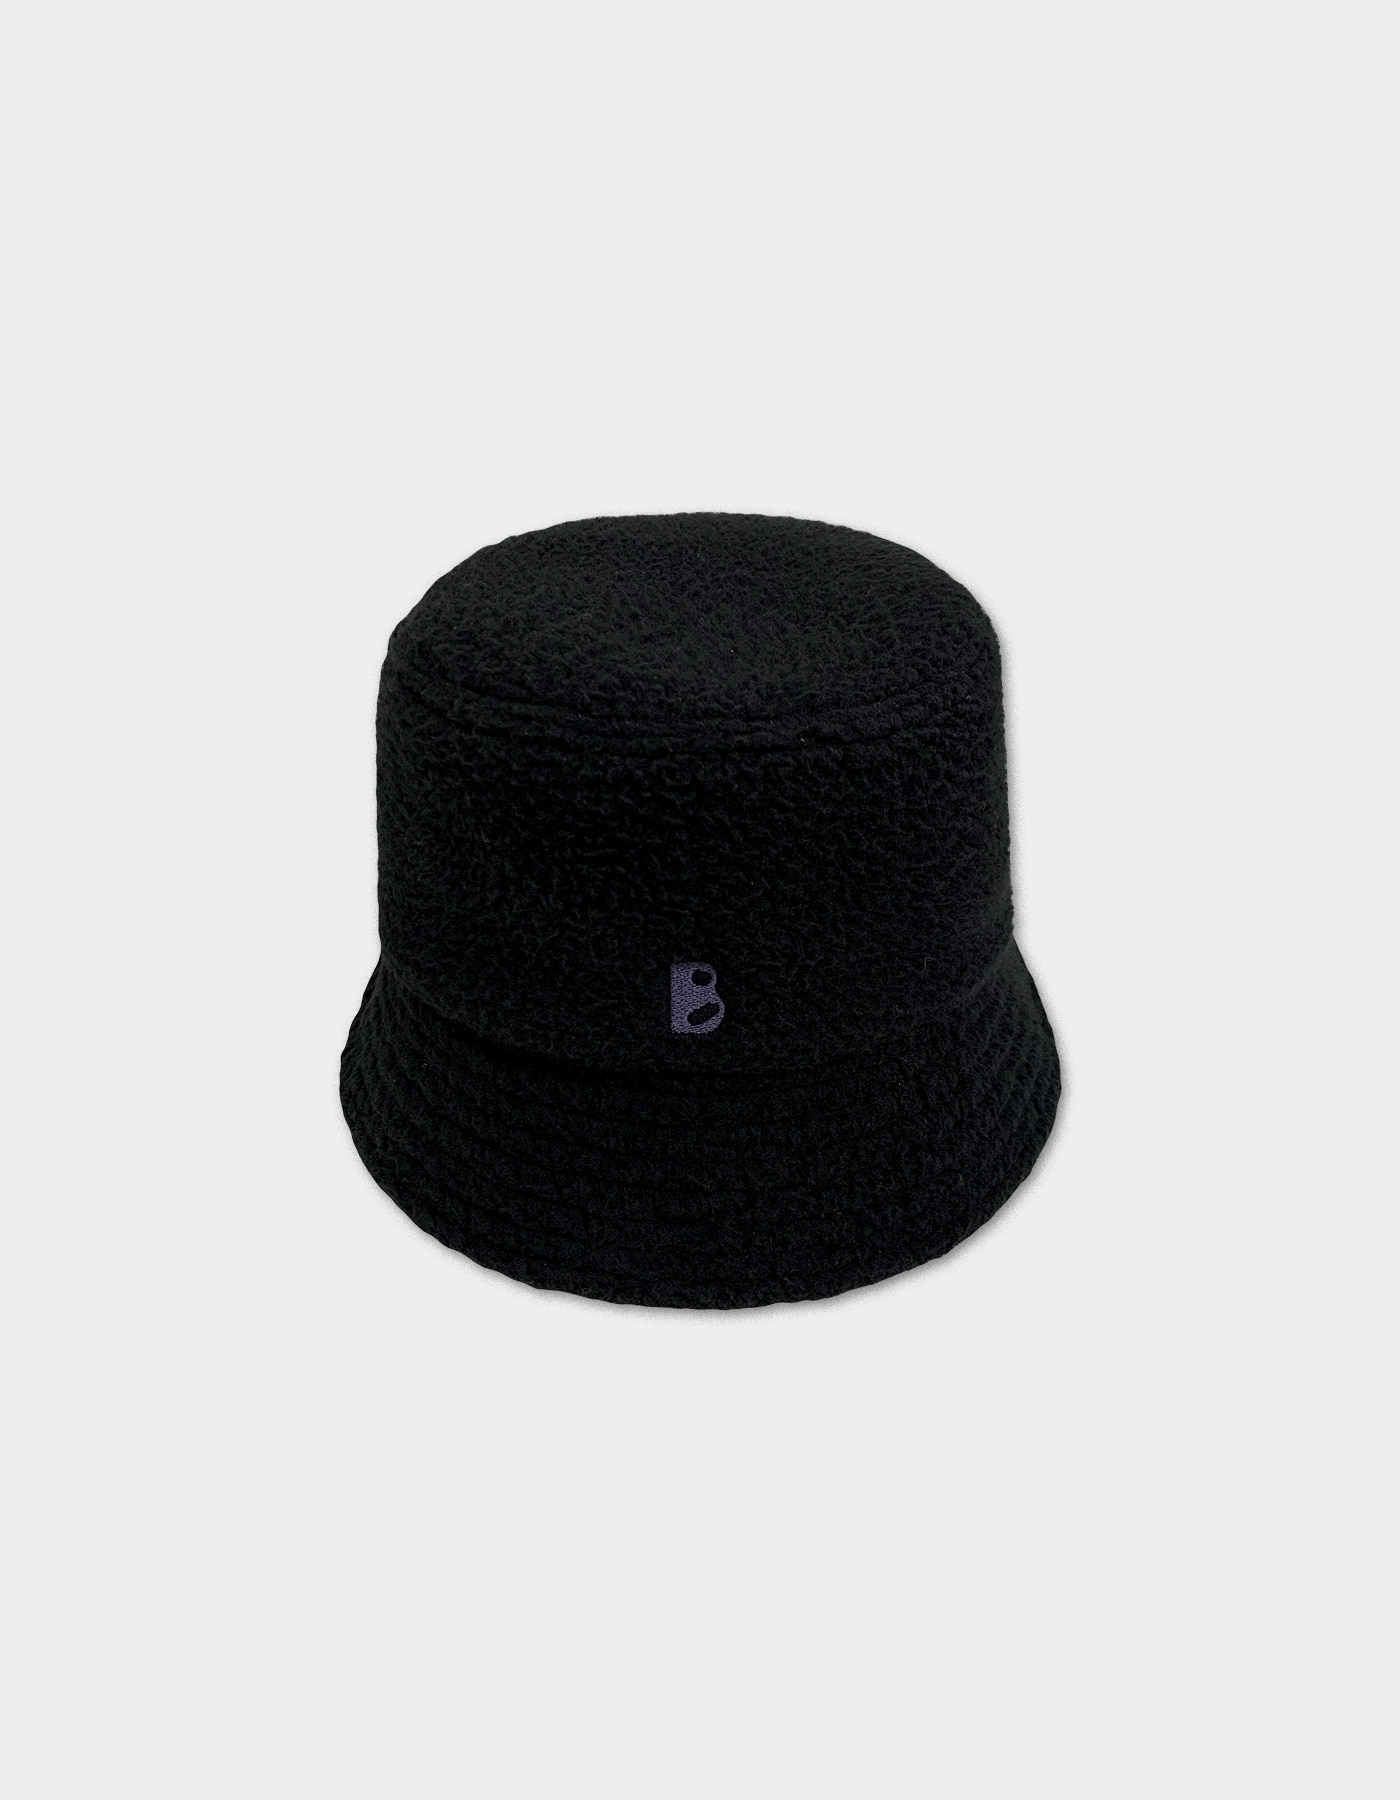 Fleece b logo bucket hat - black